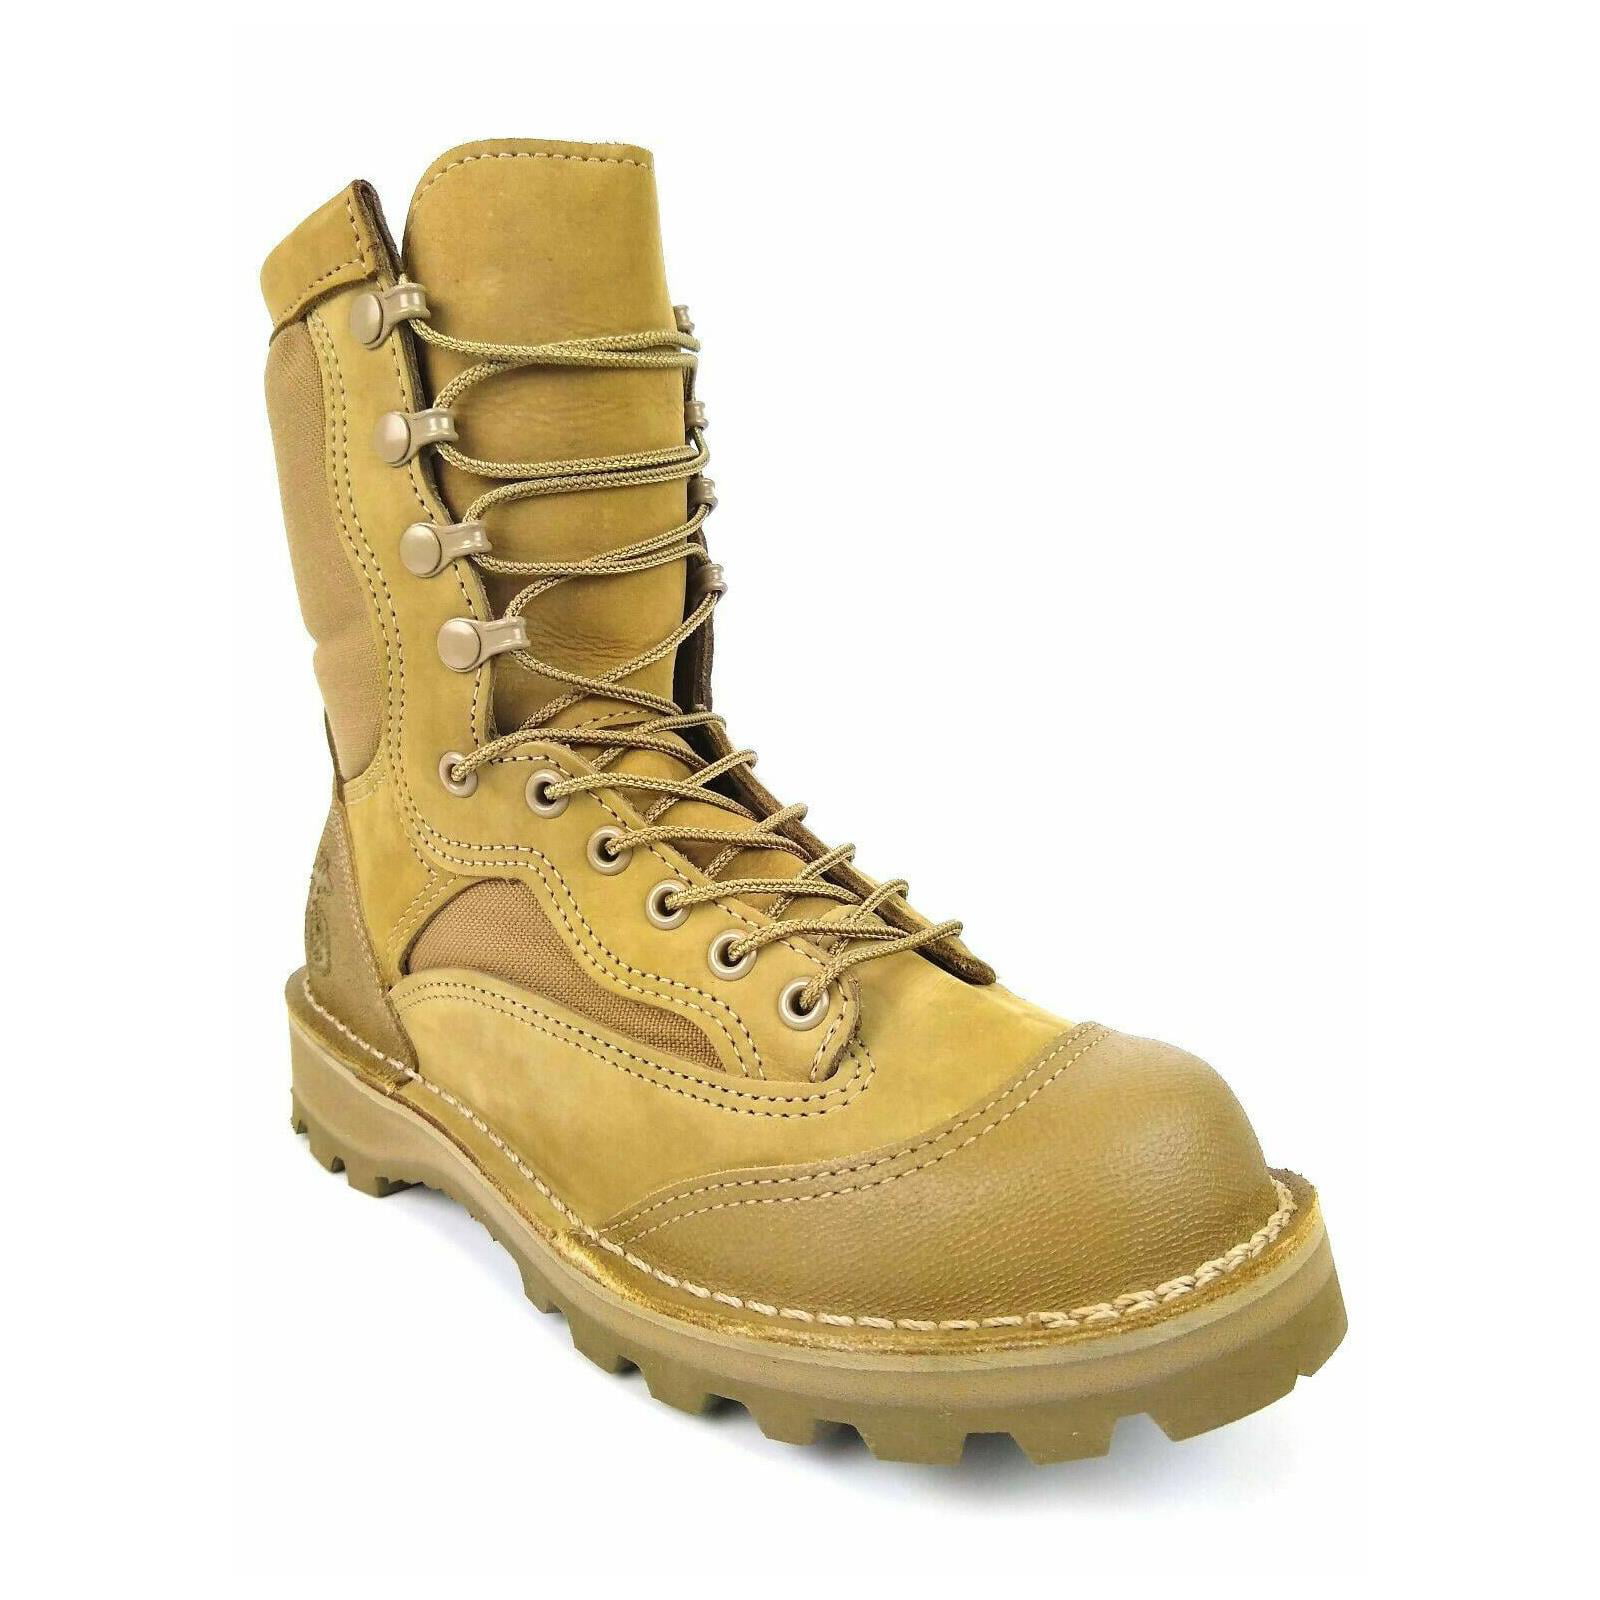 BATES USMC 8" Steel Toe Tactical Boots Original Marines USA Made Sizes 7 to 15